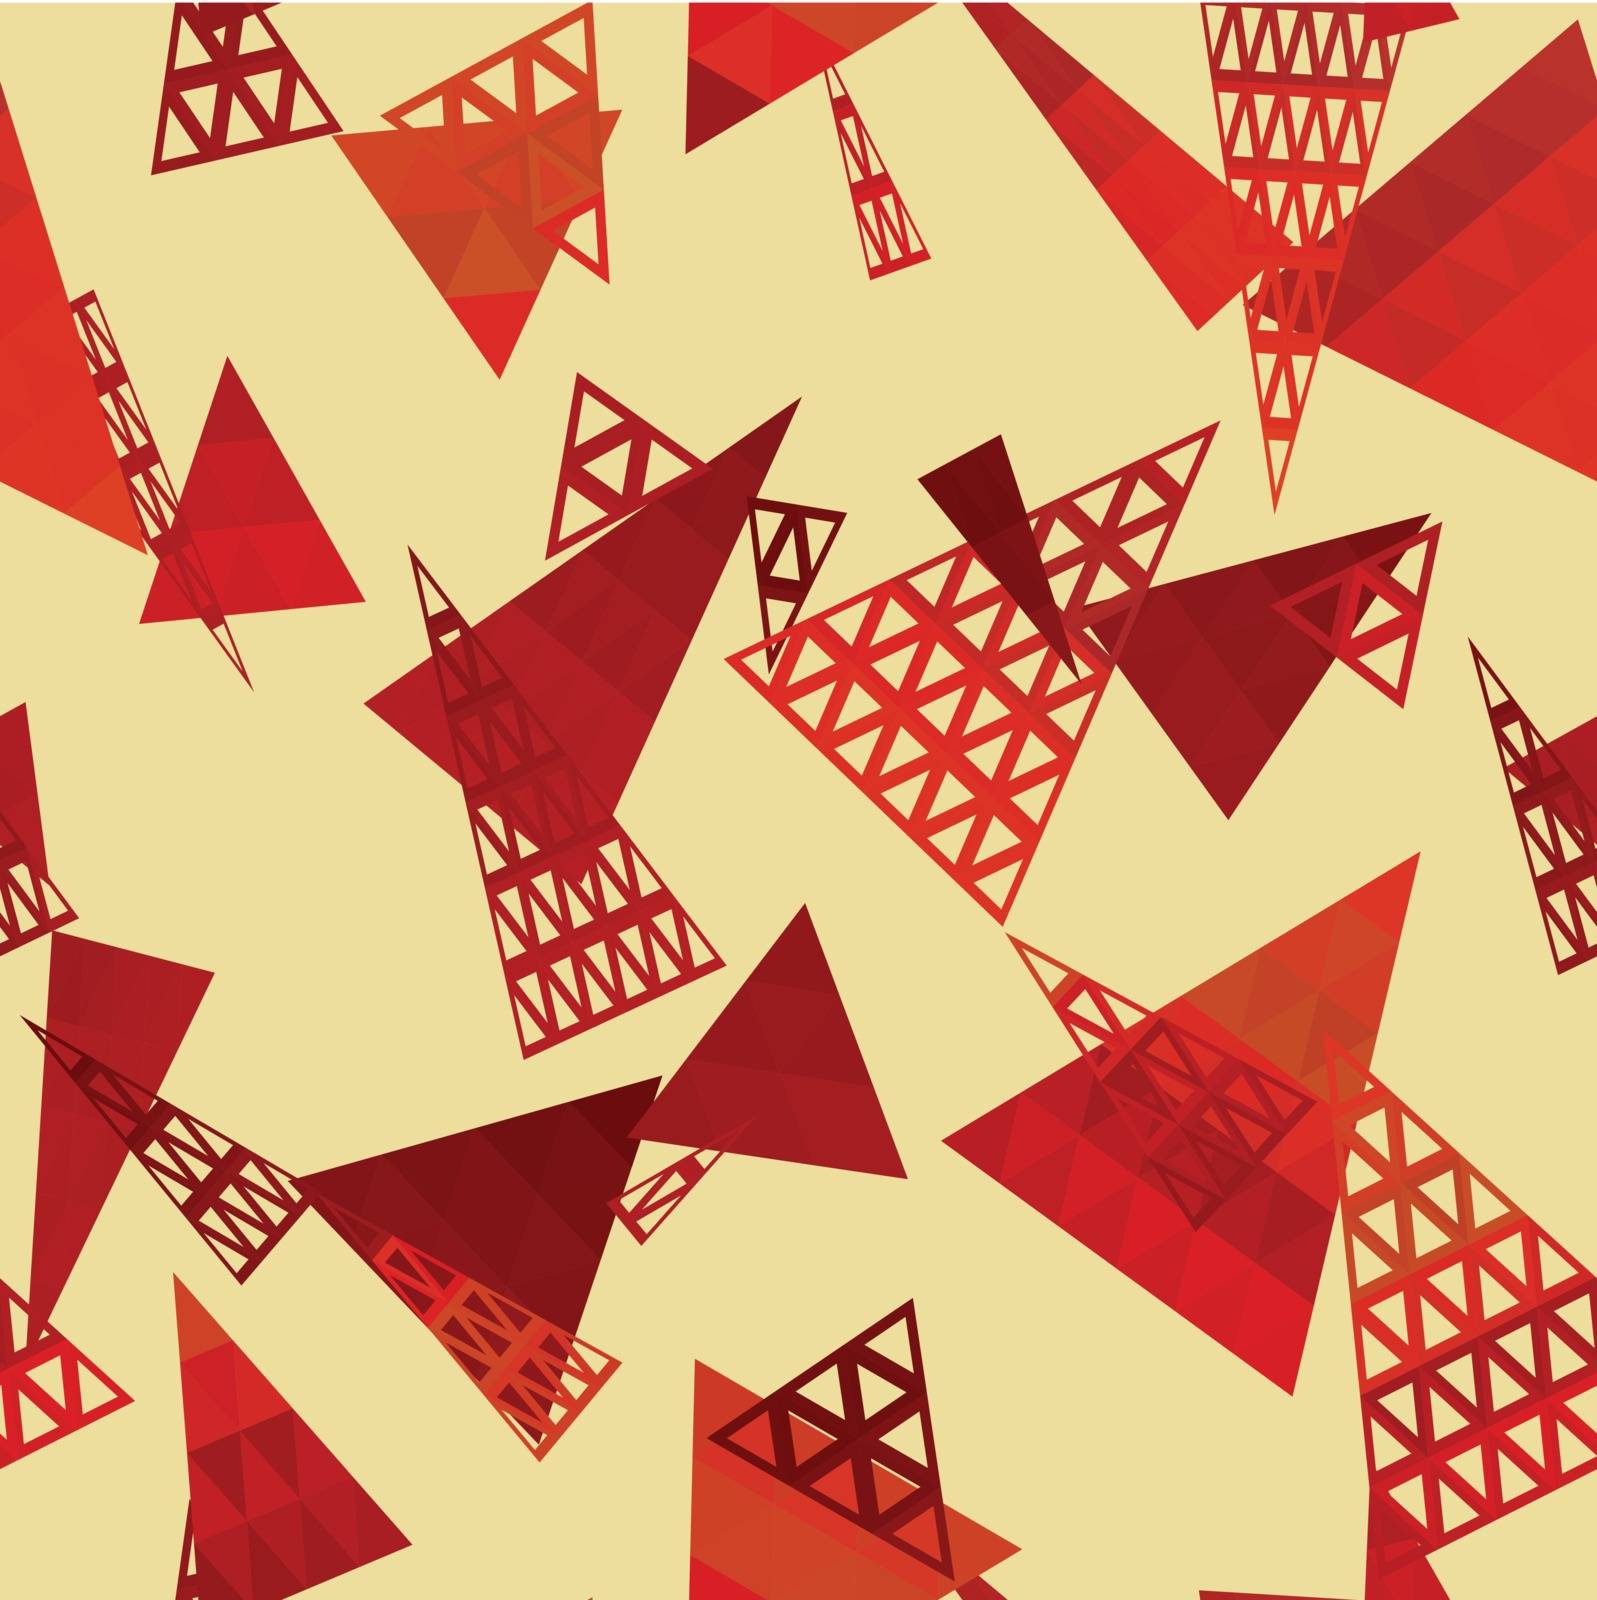 Retro pattern of geometric shapes by LittleCuckoo